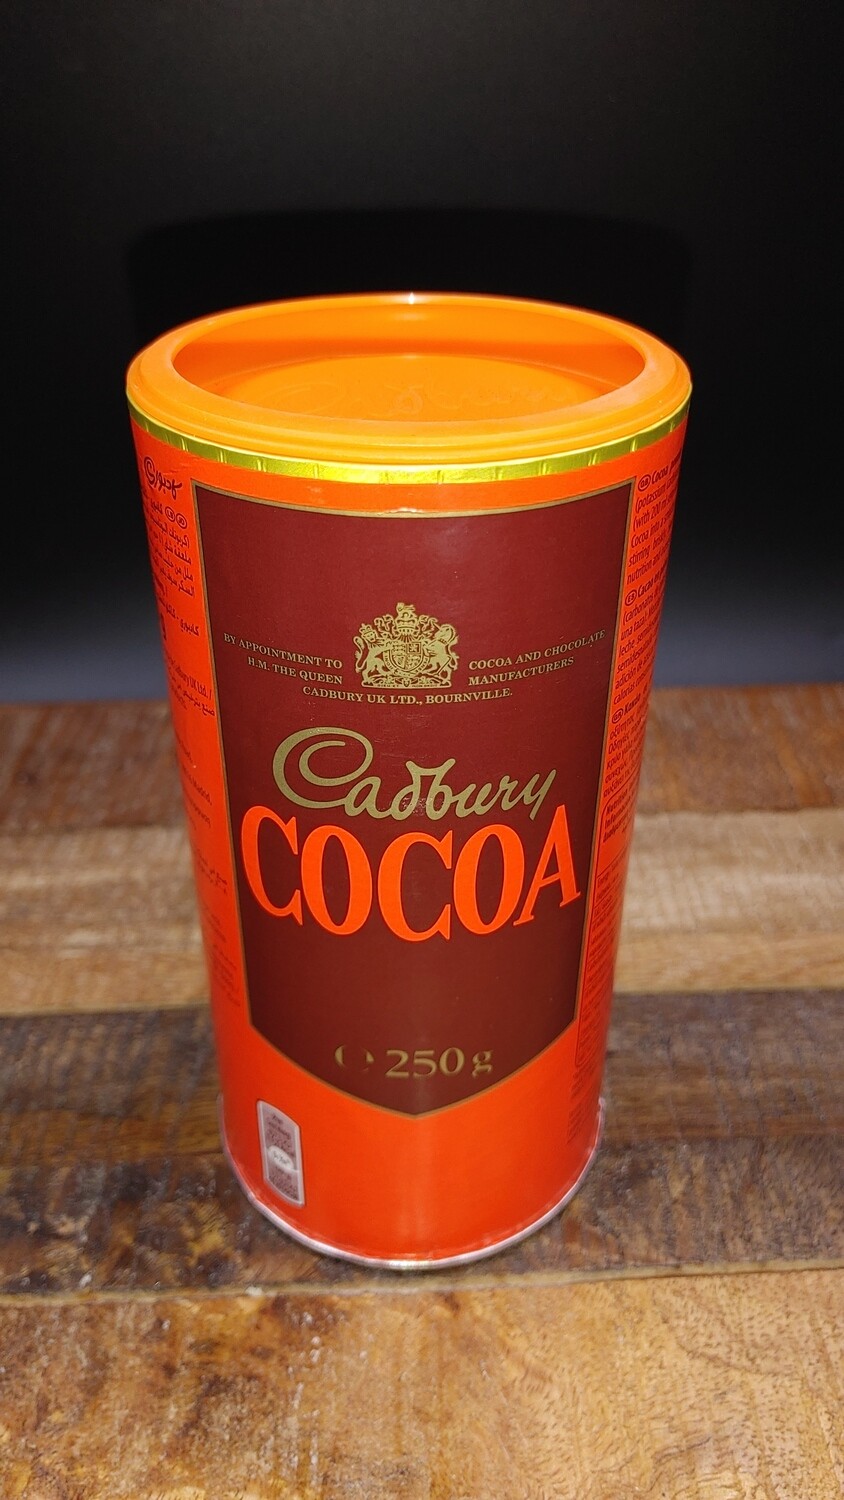 Cadbury Cocoa 250g Promo